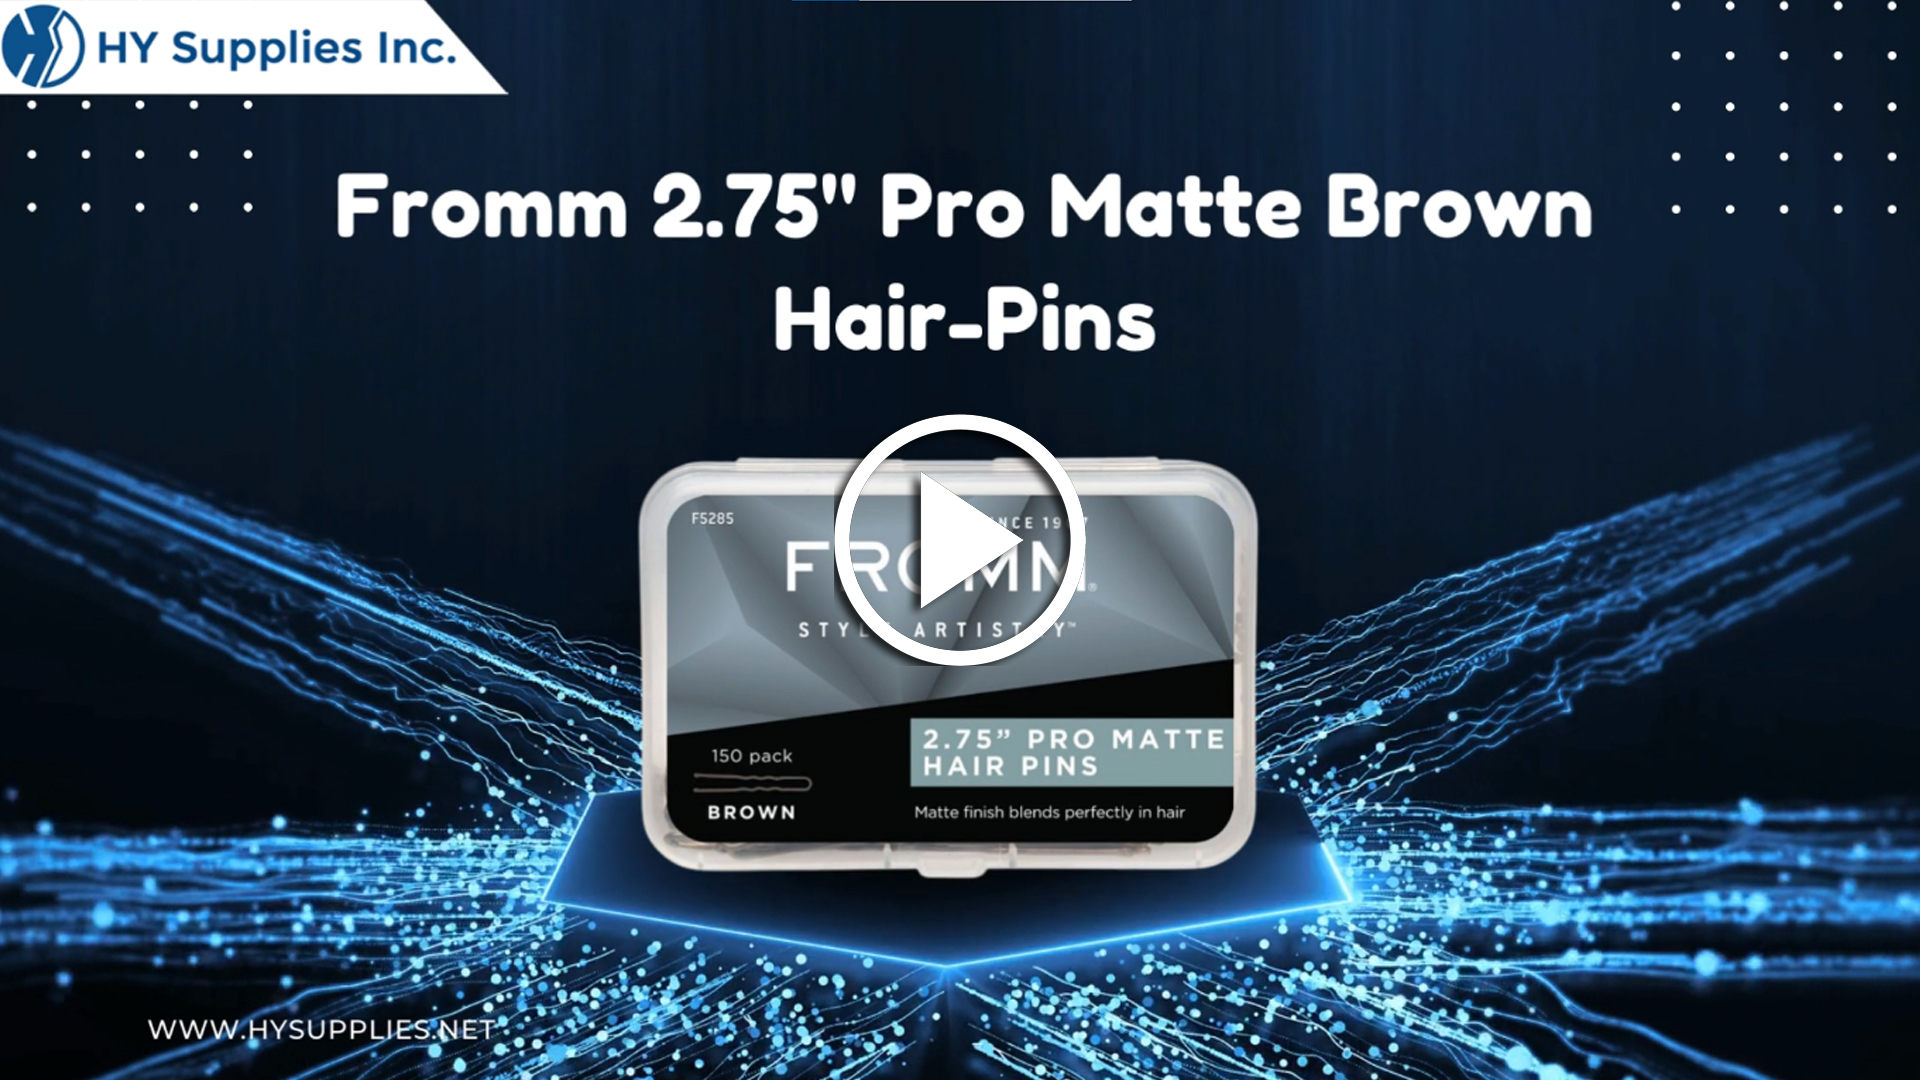 Fromm 2.75" Pro Matte Brown Hair-Pins